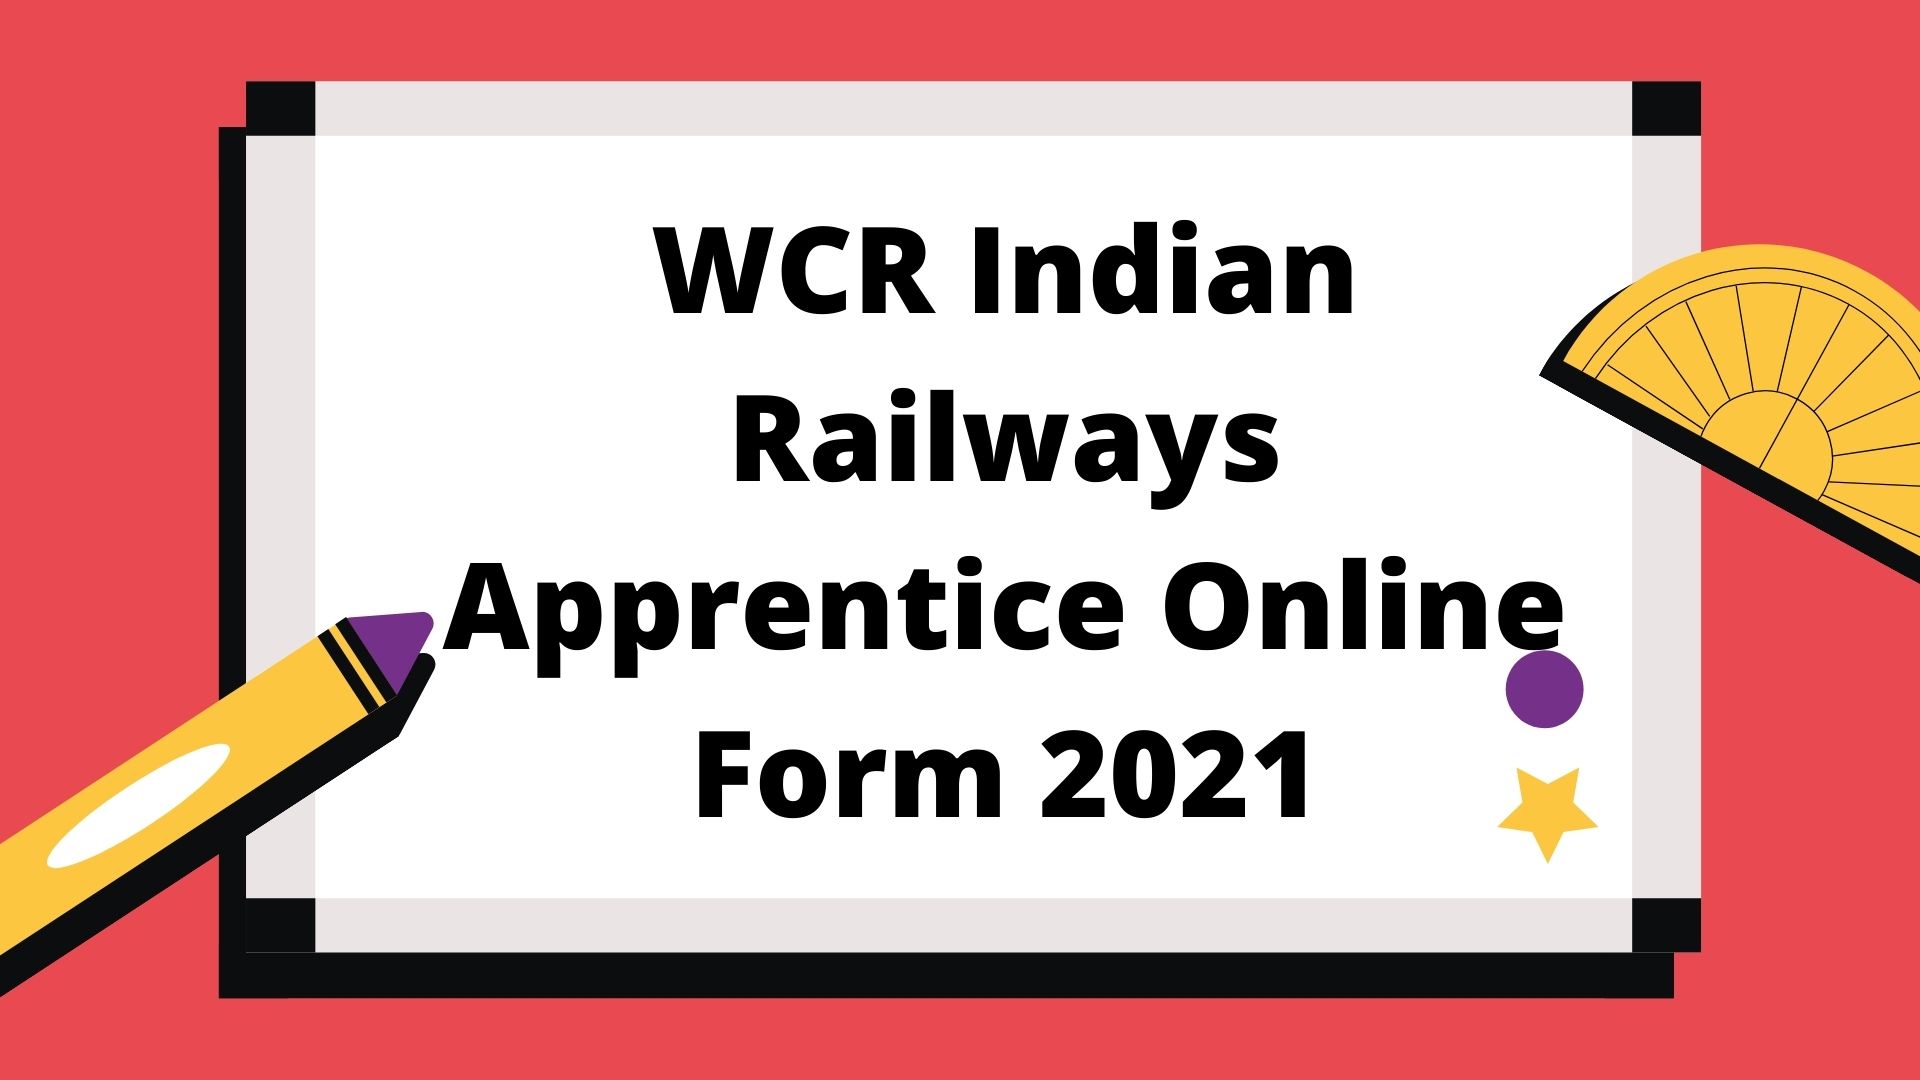 WCR Indian Railways Apprentice Online Form 2021